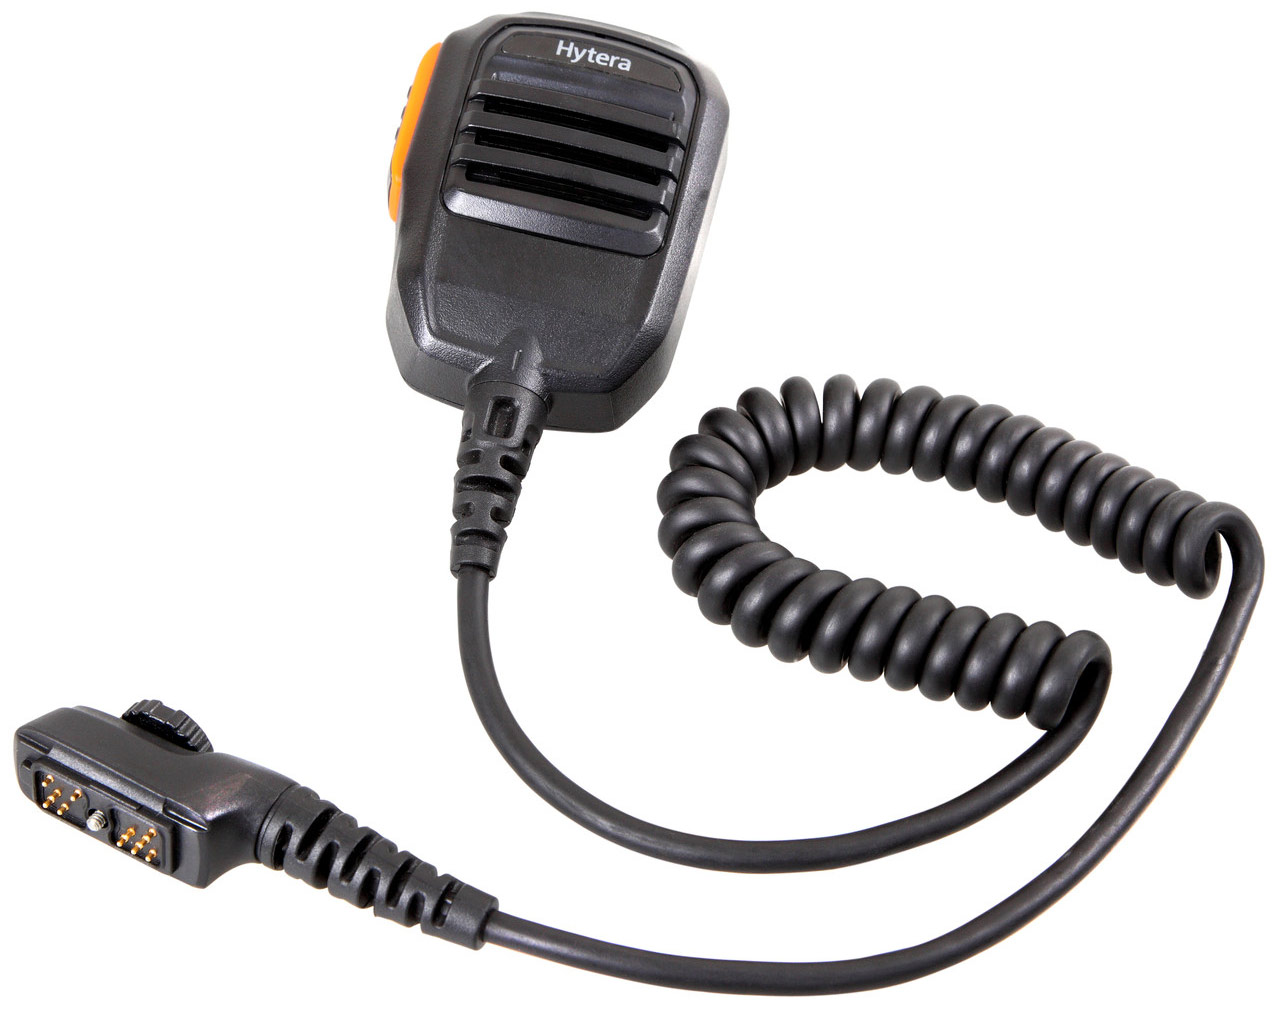 Remote Speaker Microphone with built-in patrol card